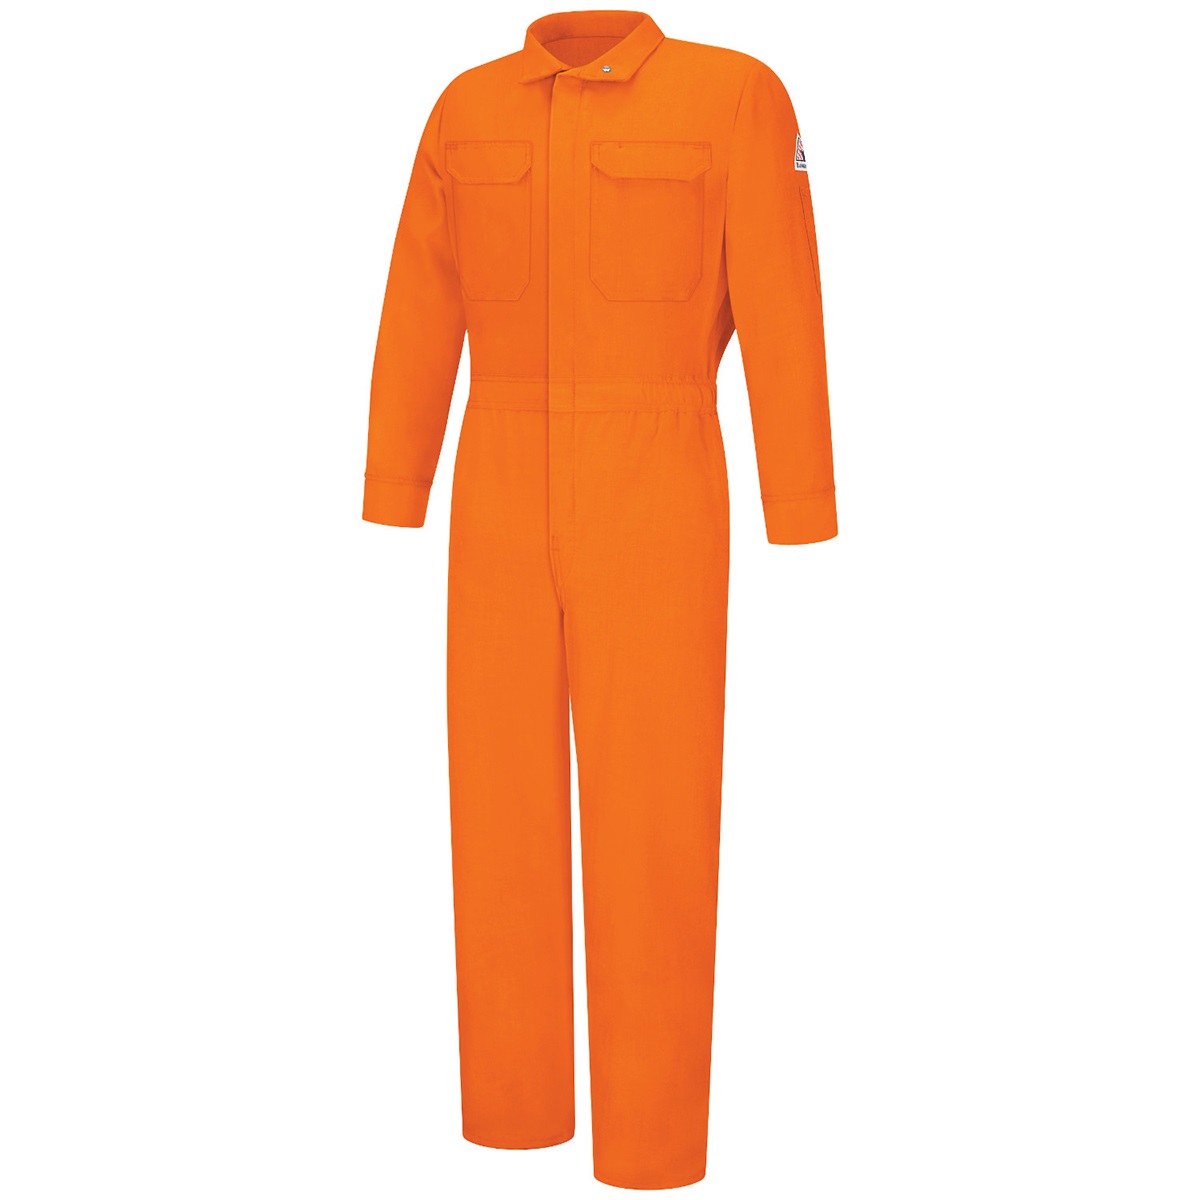 Womens Lightweight Nomex FR Premium Coverall in orange